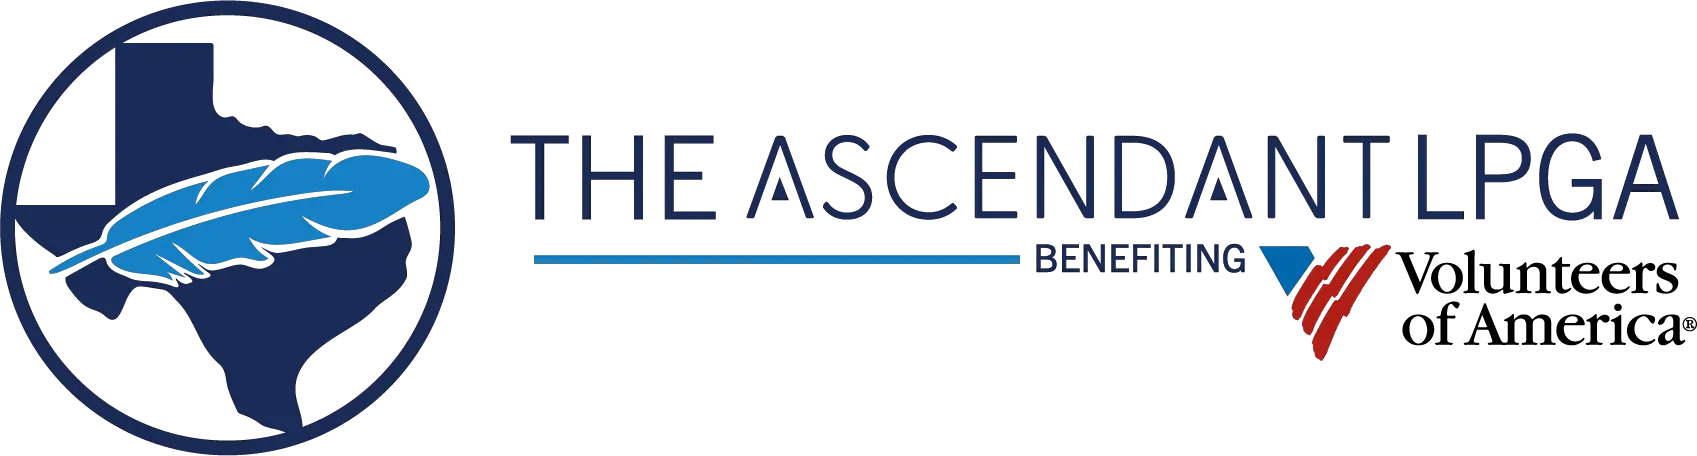 Ascendant LPGA Logo